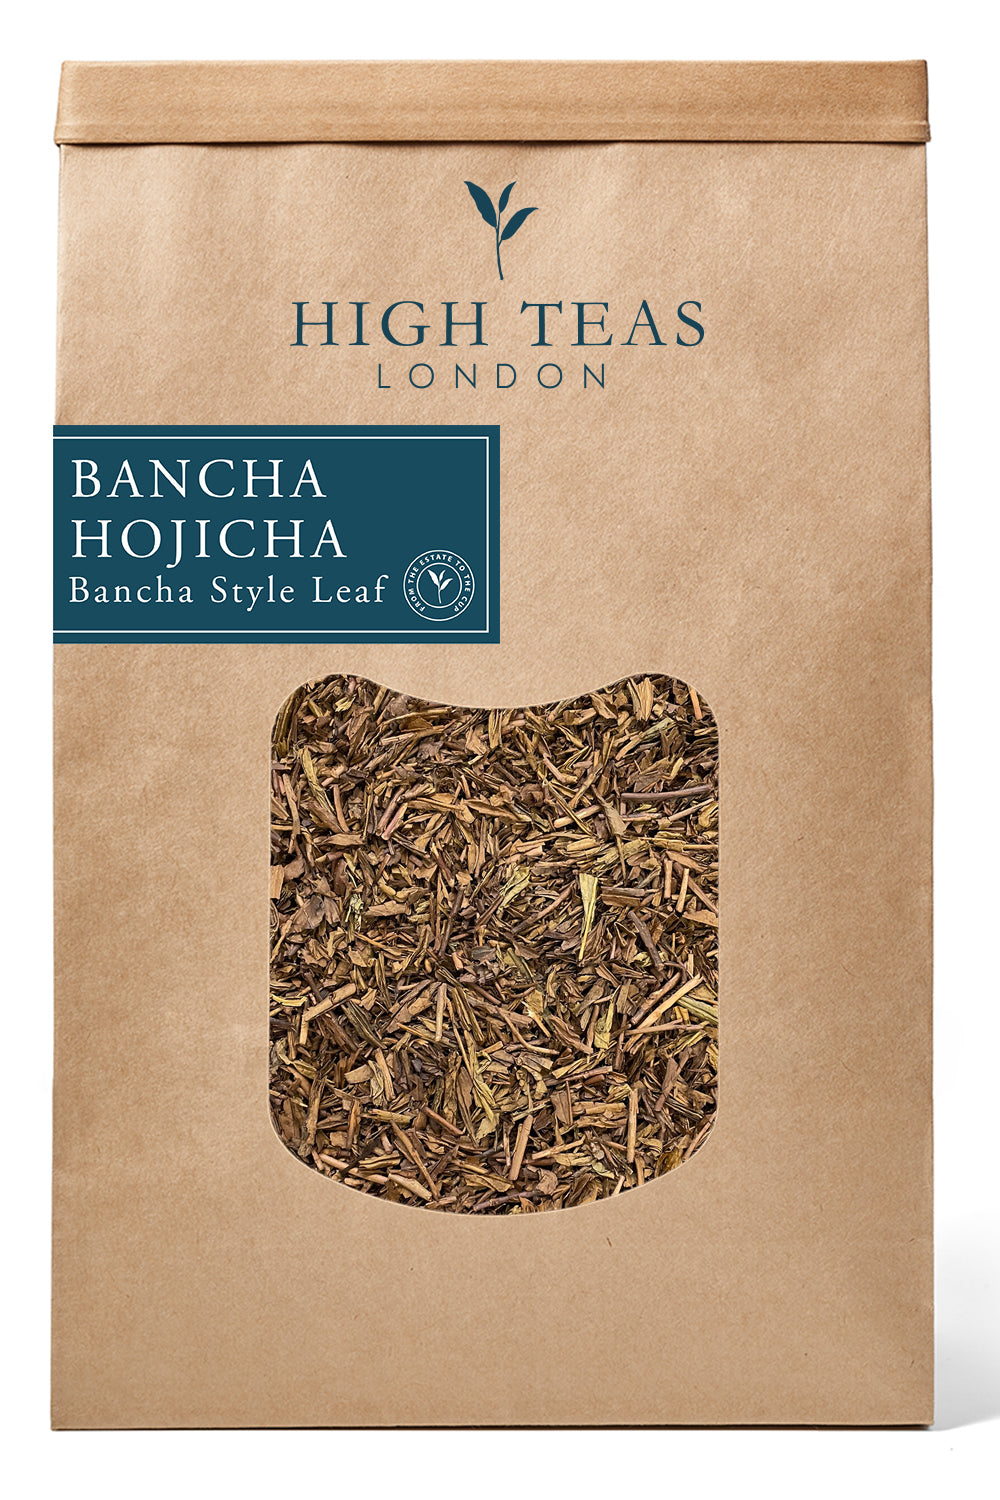 Bancha Hojicha-500g-Loose Leaf Tea-High Teas